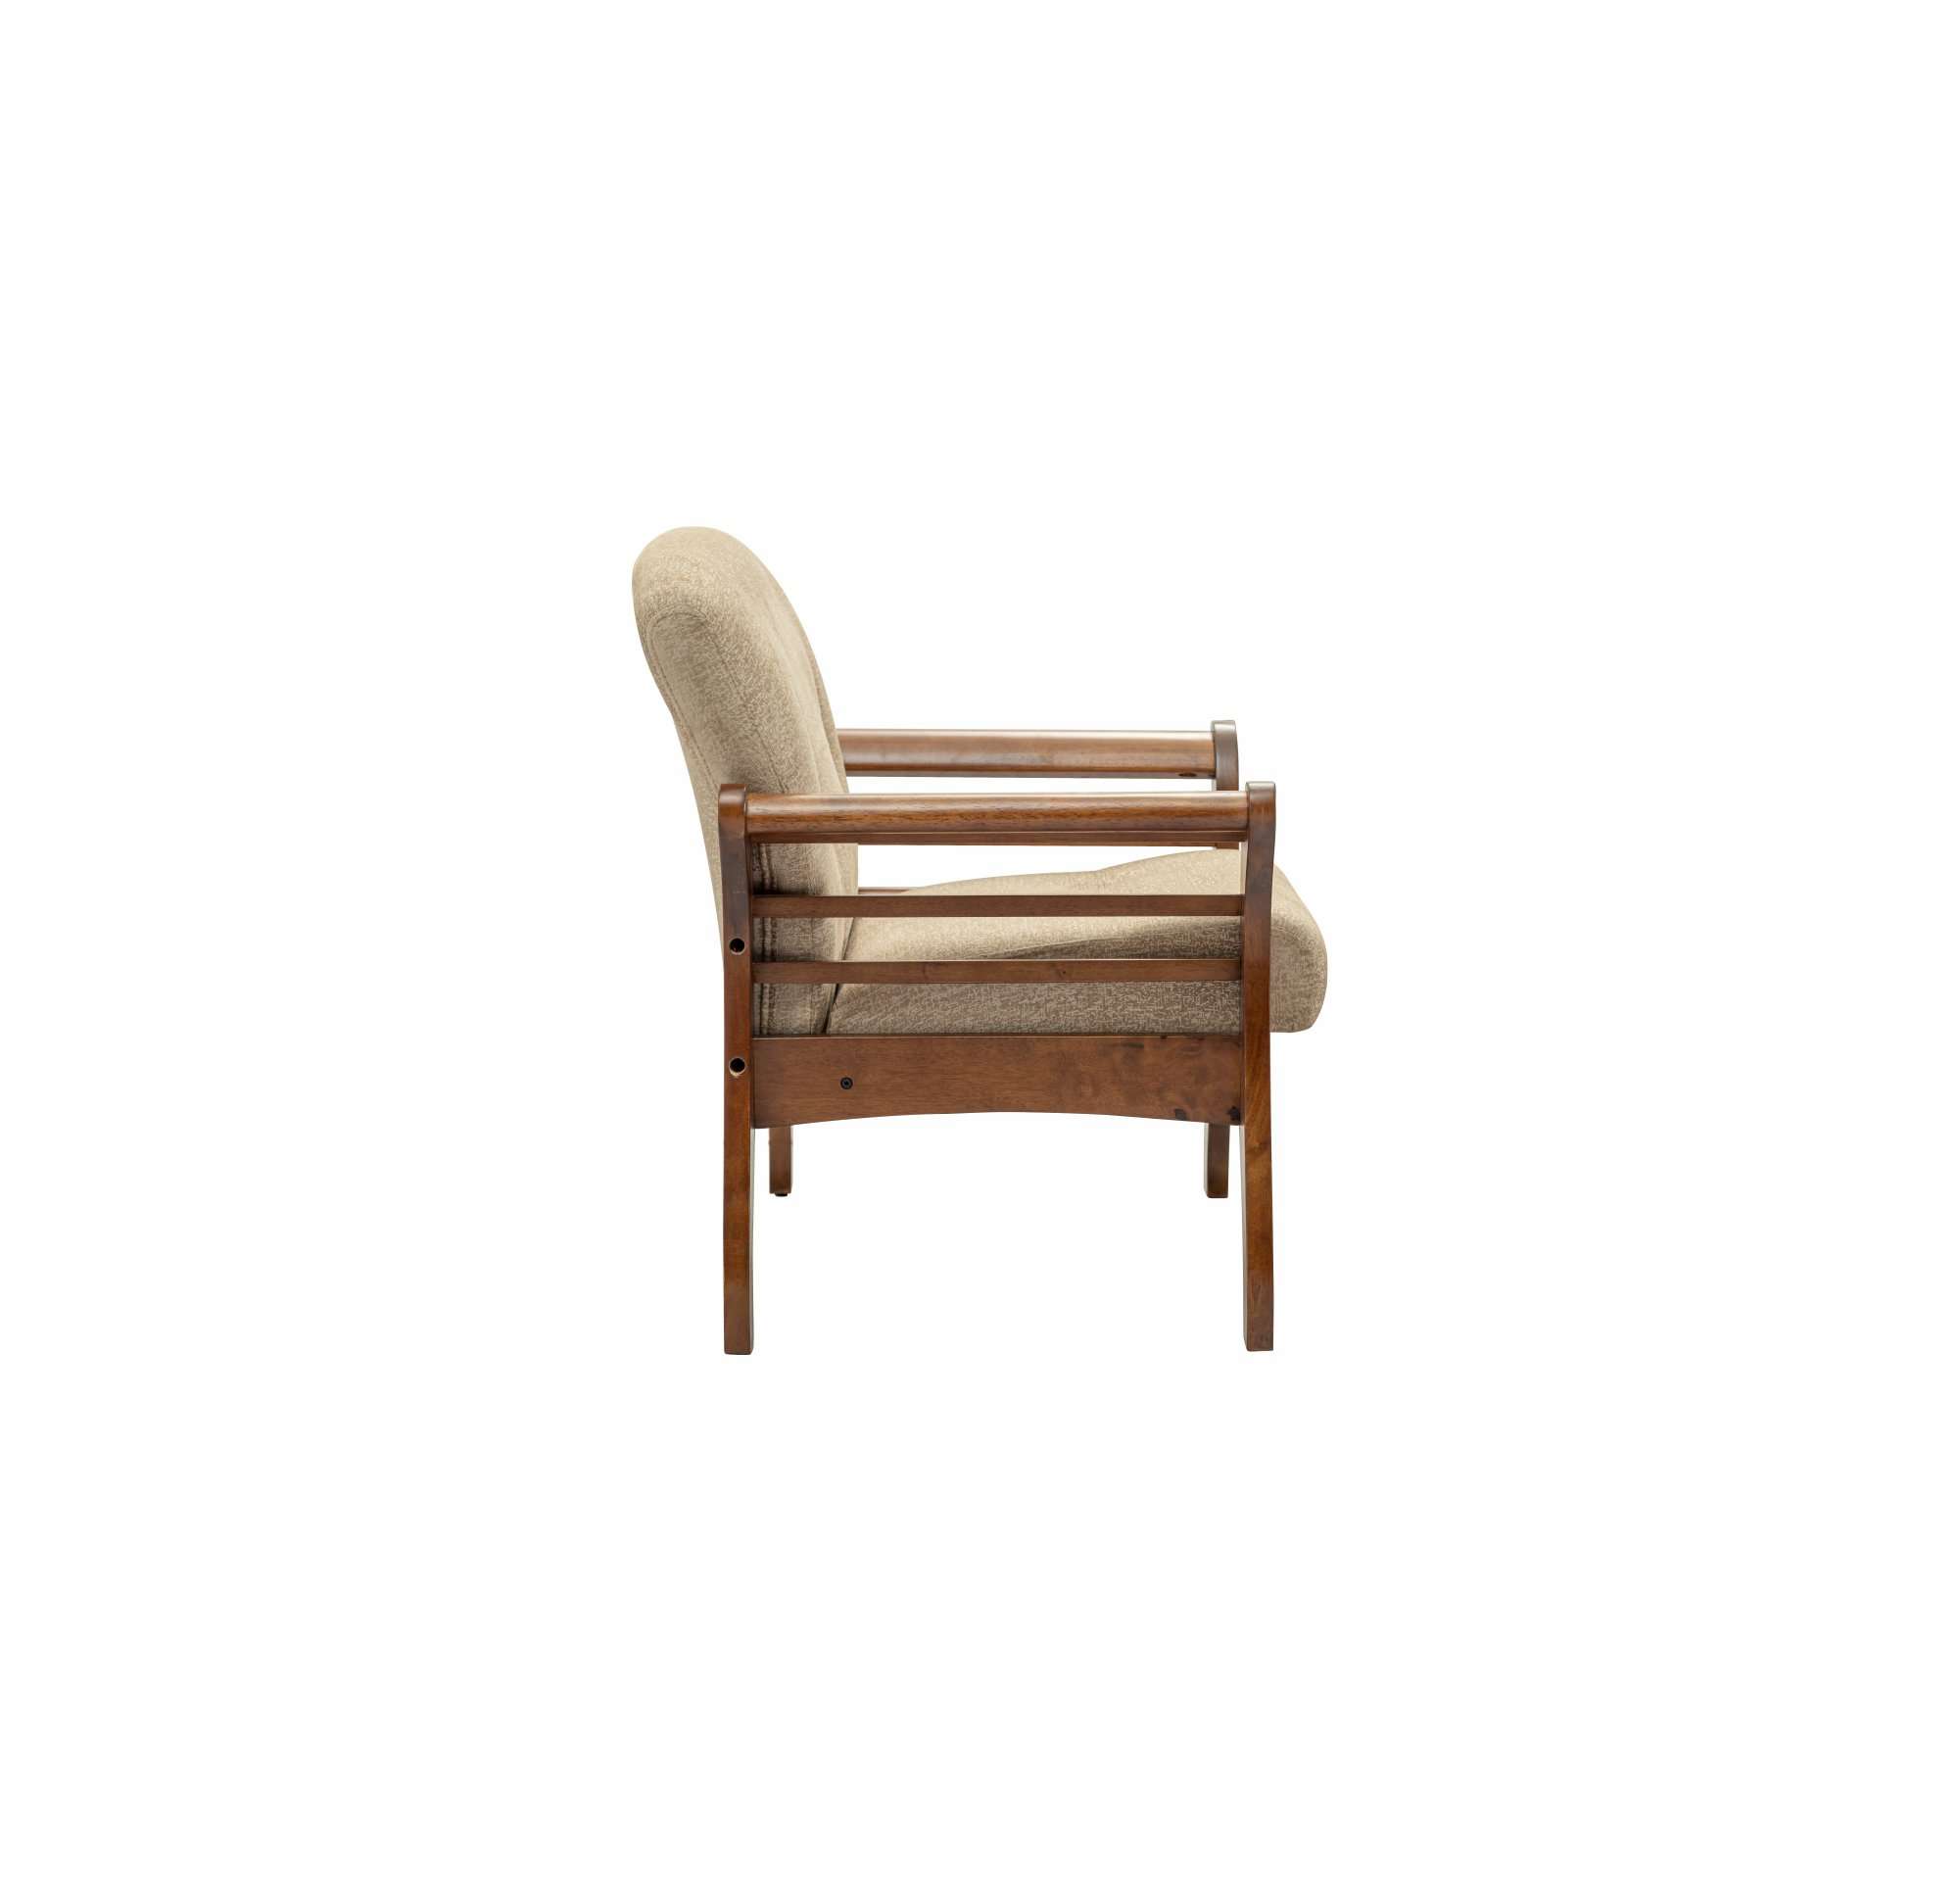 WSB003-Wooden Sofa Baywood Treble Seater-LB05/Dark Walnut